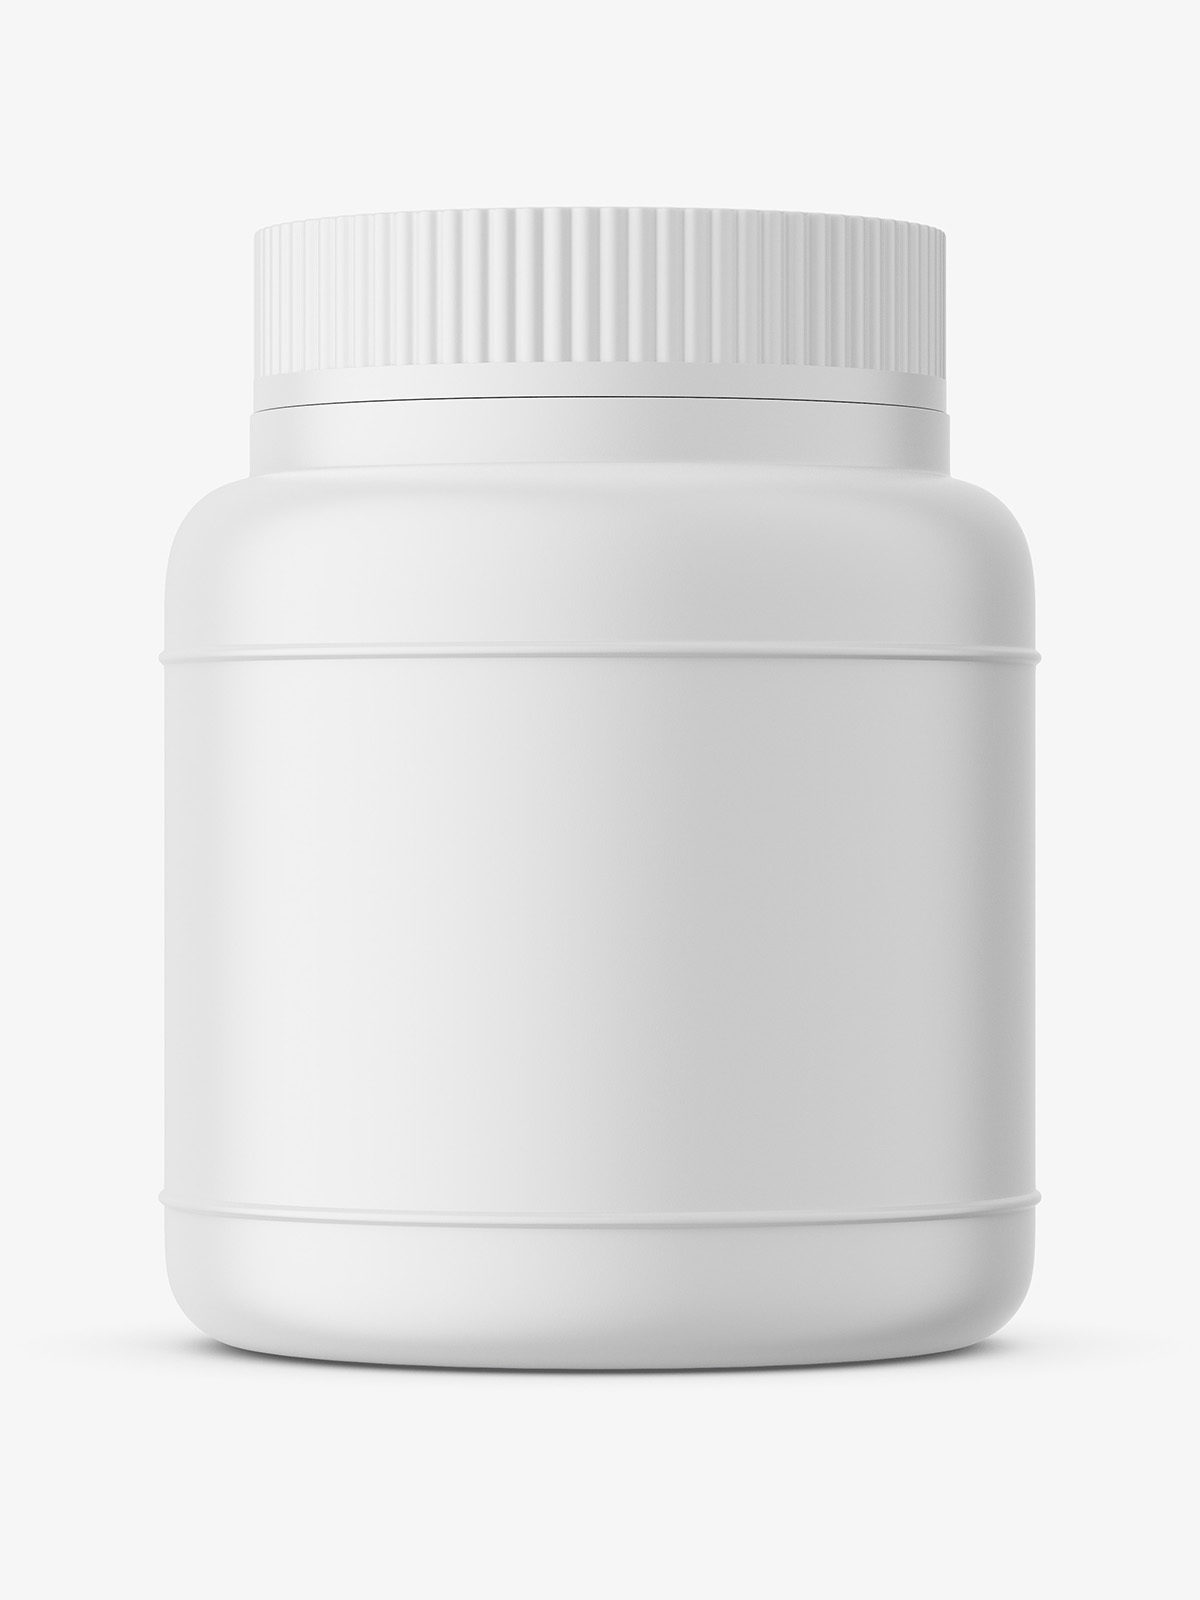 Download Plastic pharmacy jar mockup - Smarty Mockups